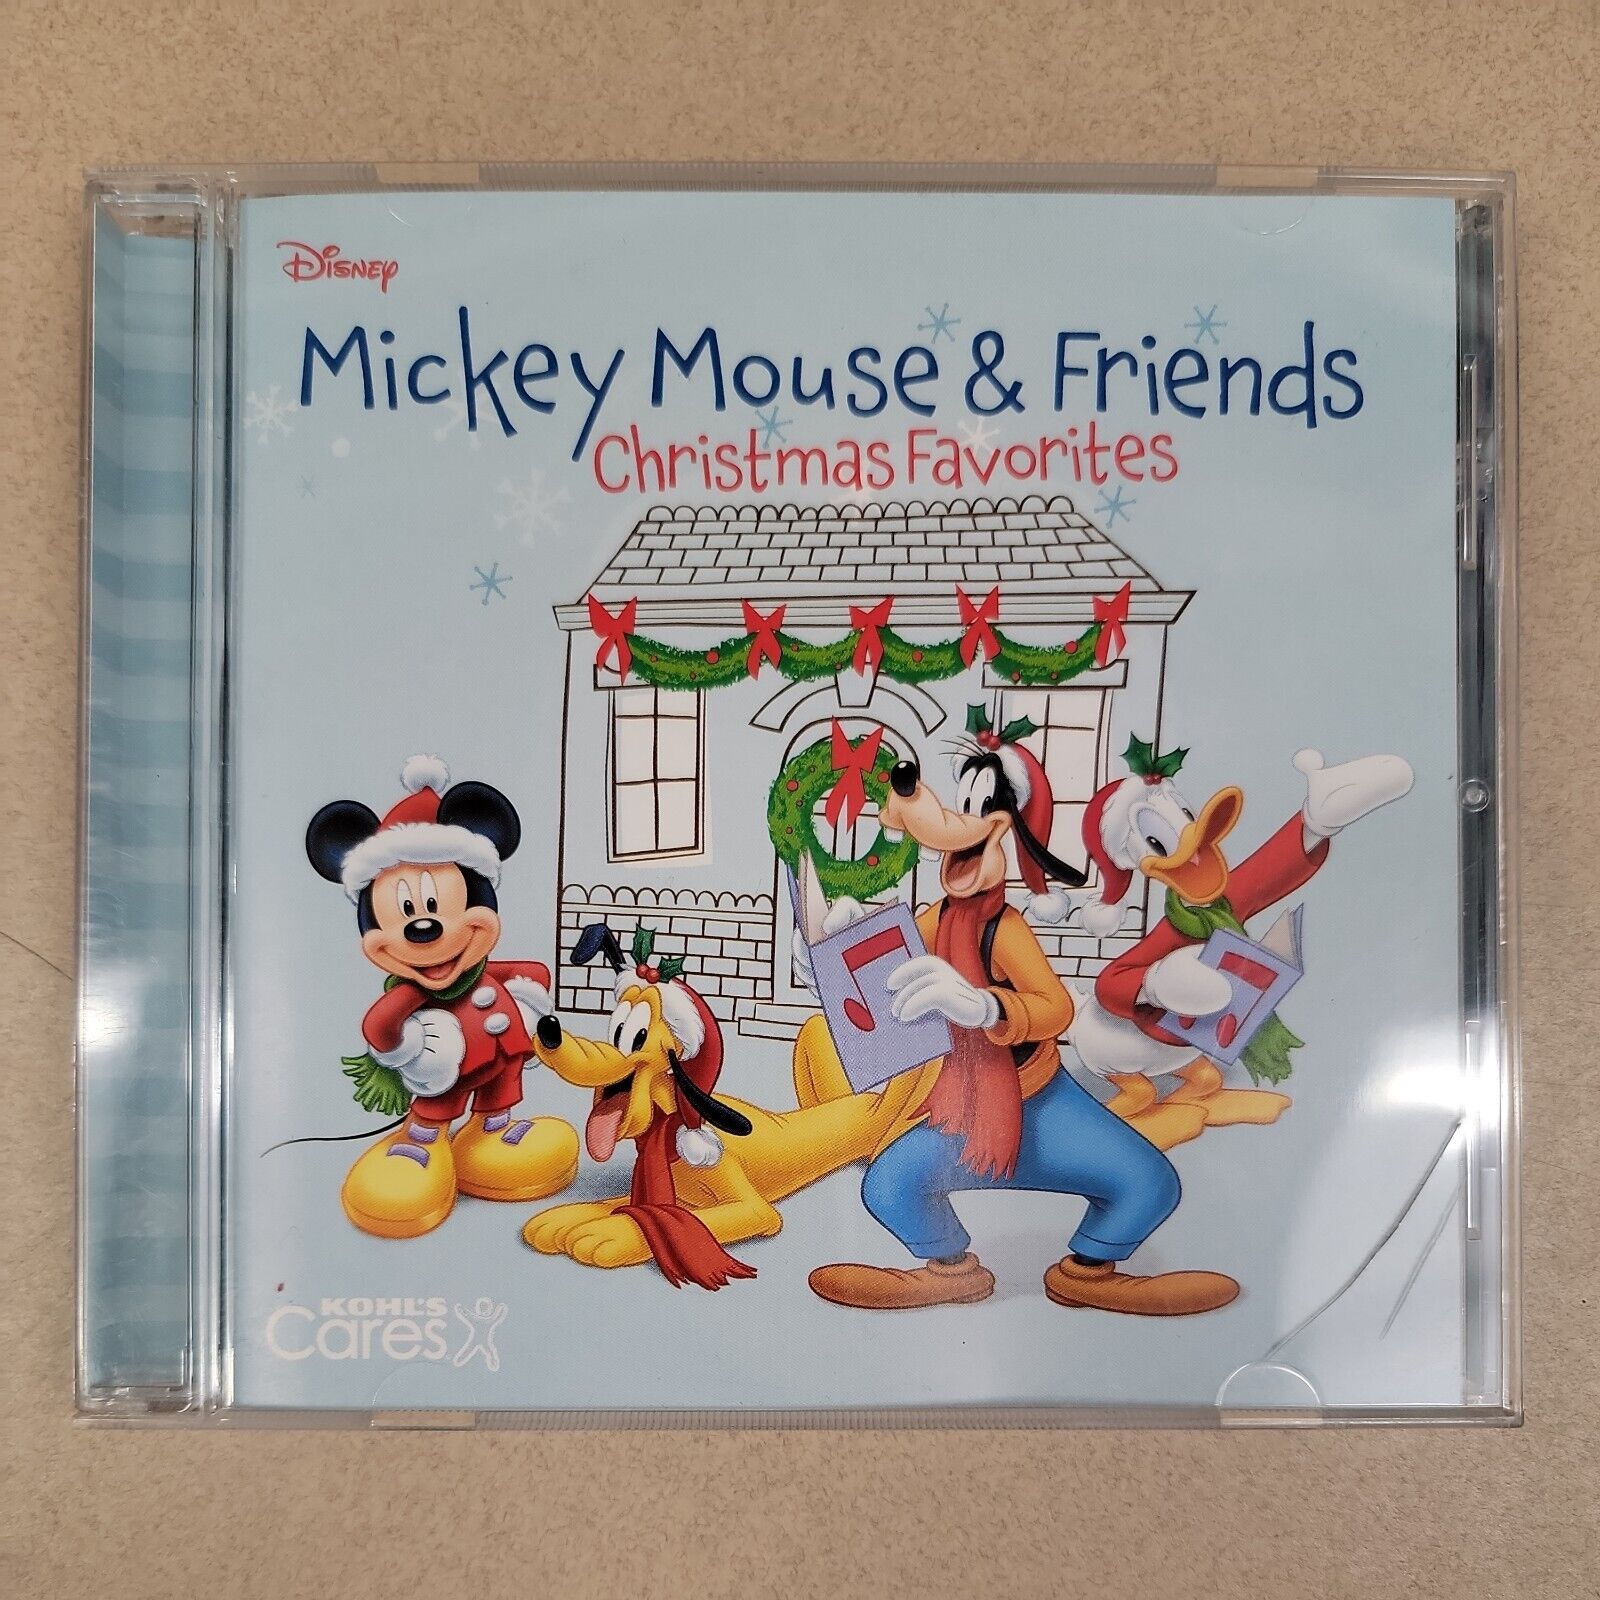 Mickey Mouse & Friends - Christmas Favorites (CD, 2014, Kohls Cares/Disney)